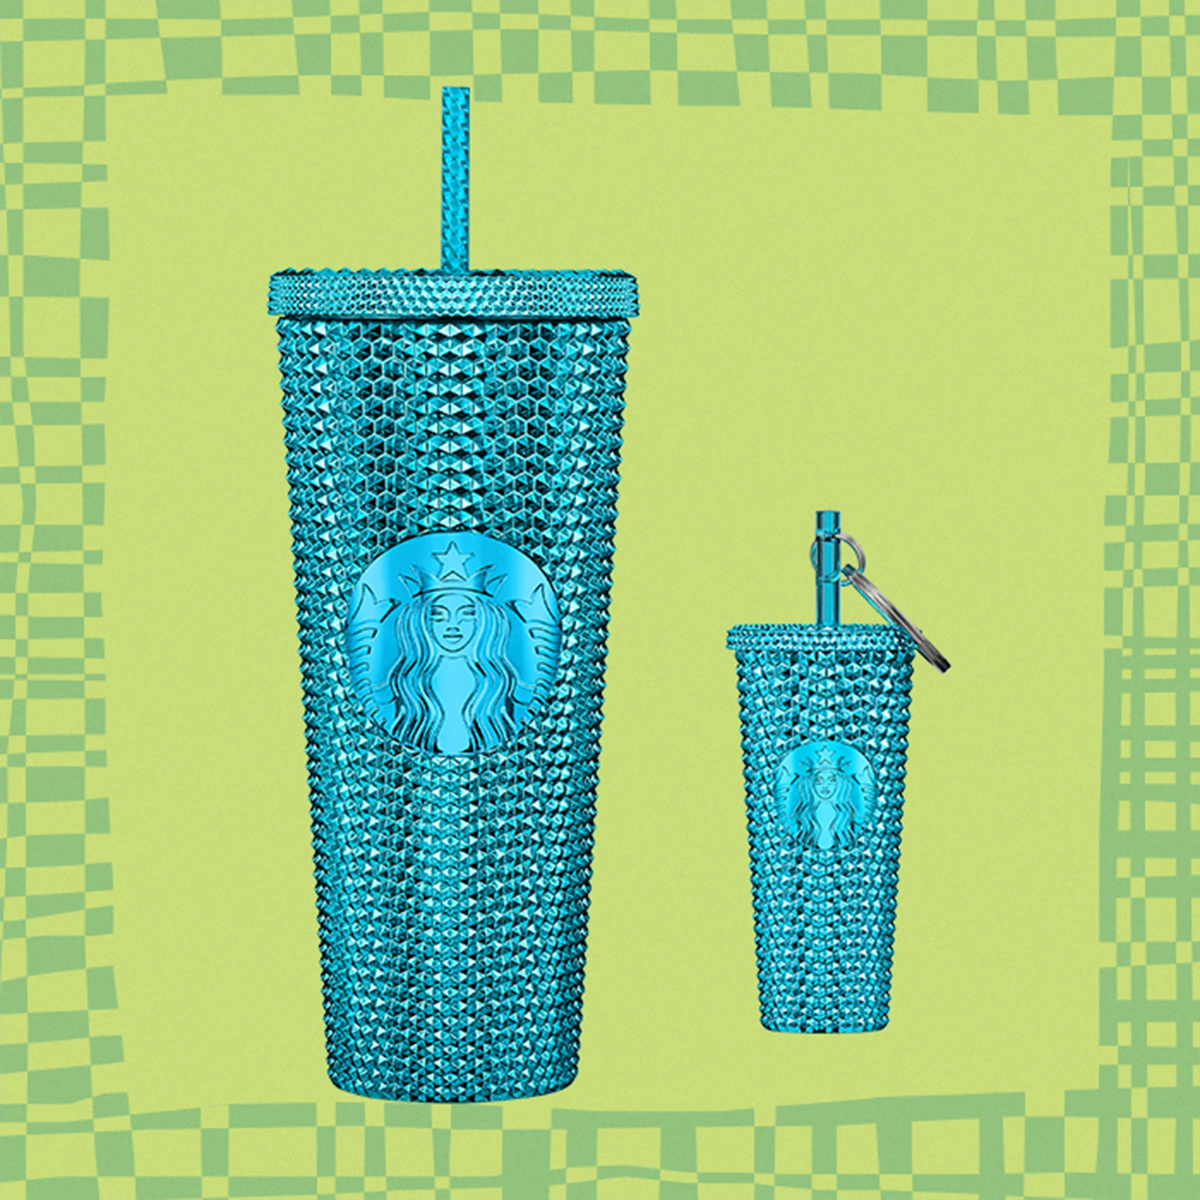 Groom Est. 2023 Starbucks Cold Cup – TG Custom Designs